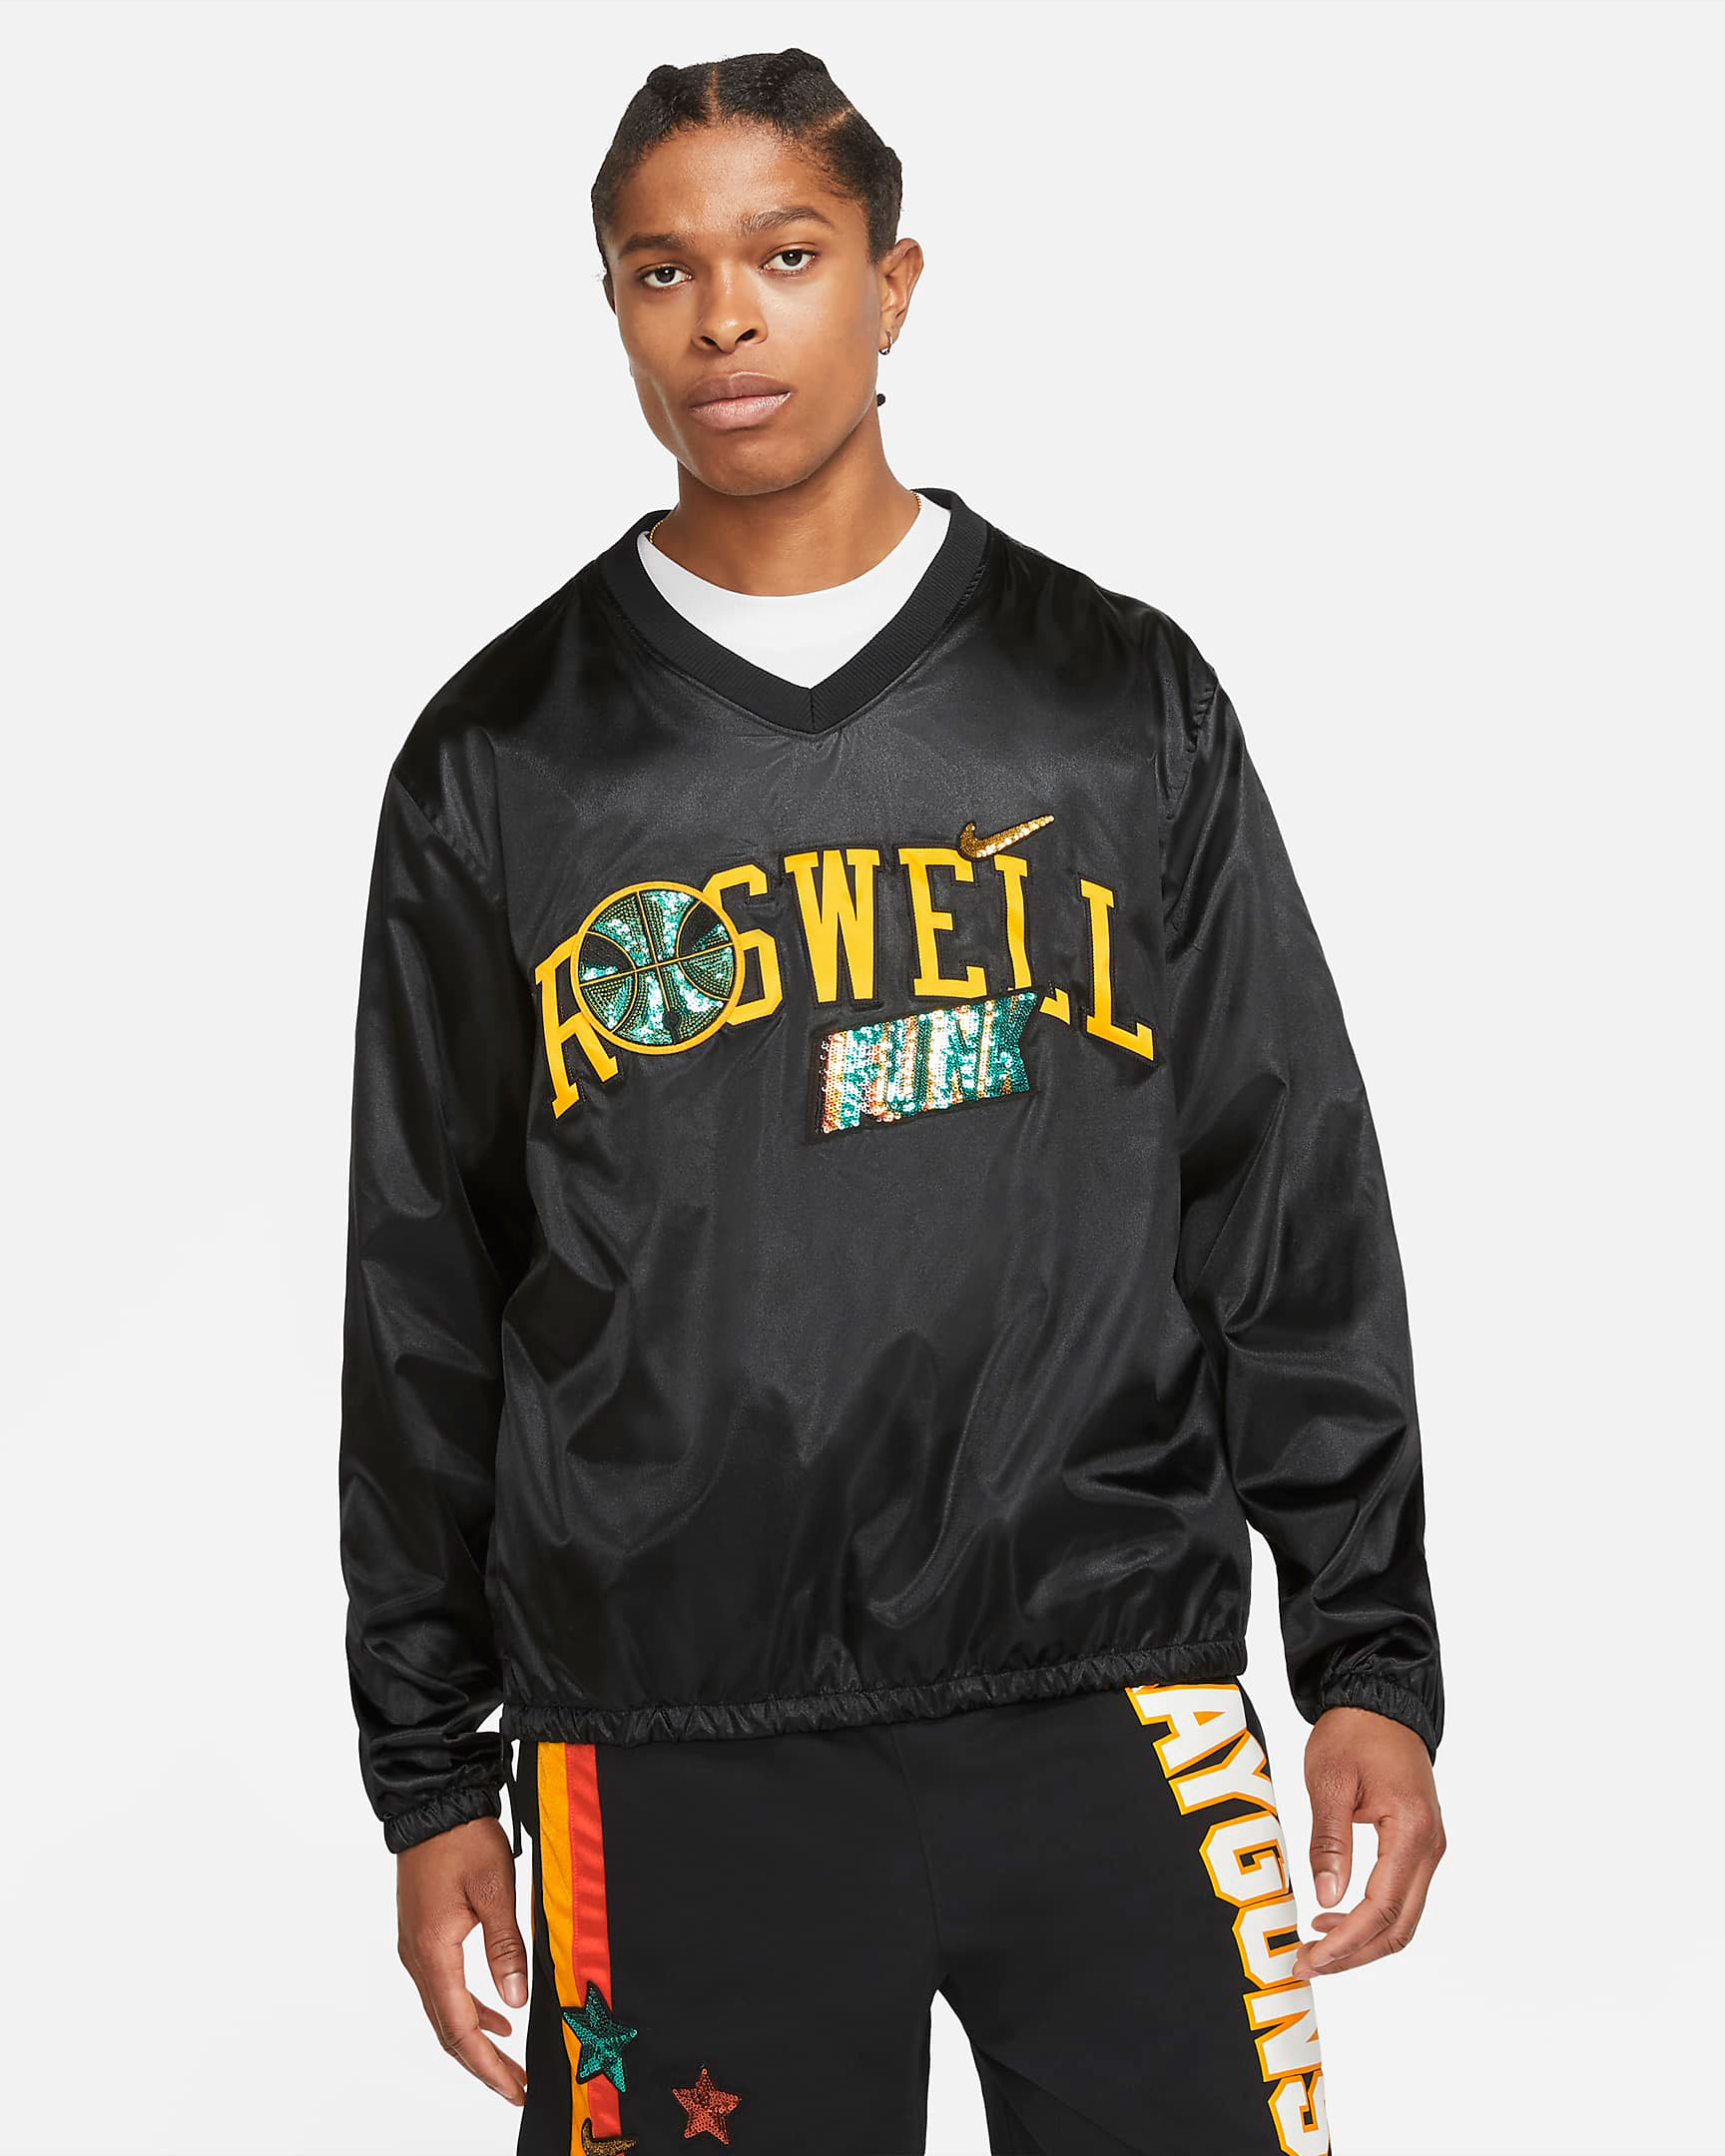 nike-roswell-rayguns-basketball-top-jacket-2